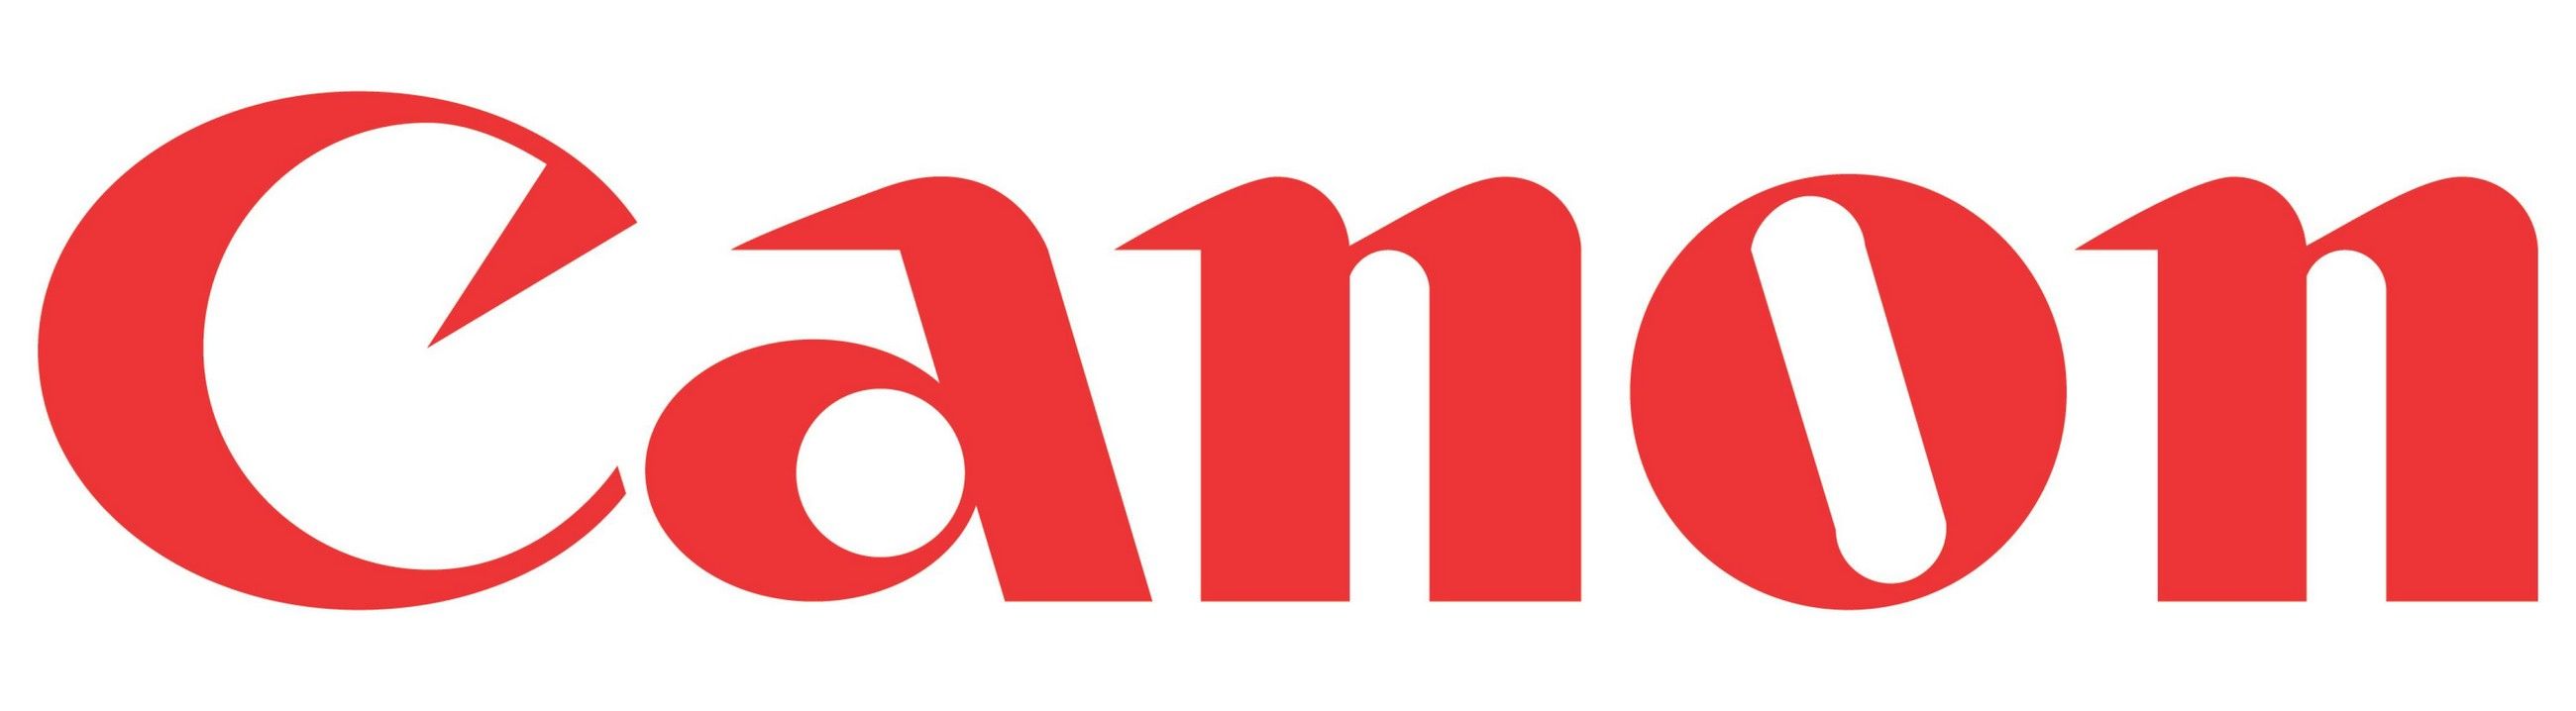 Canon Logo [canon.com] Download Vector | 企業ロゴ ...